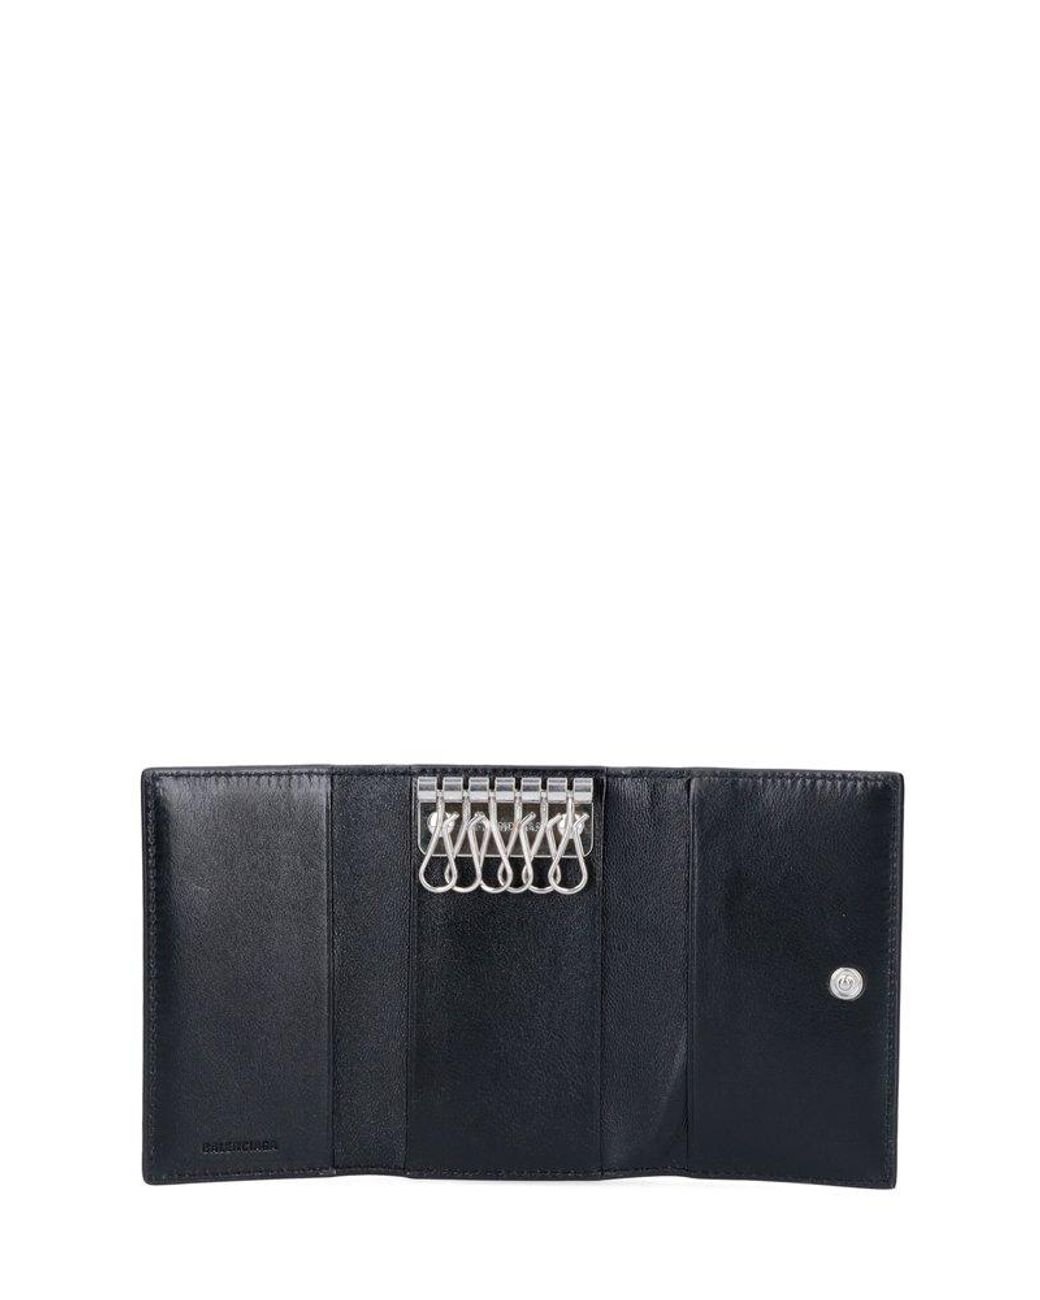 Balenciaga Small Bag Charm Key Ring Black mini Bag Key Holder Speed  Shipping  eBay